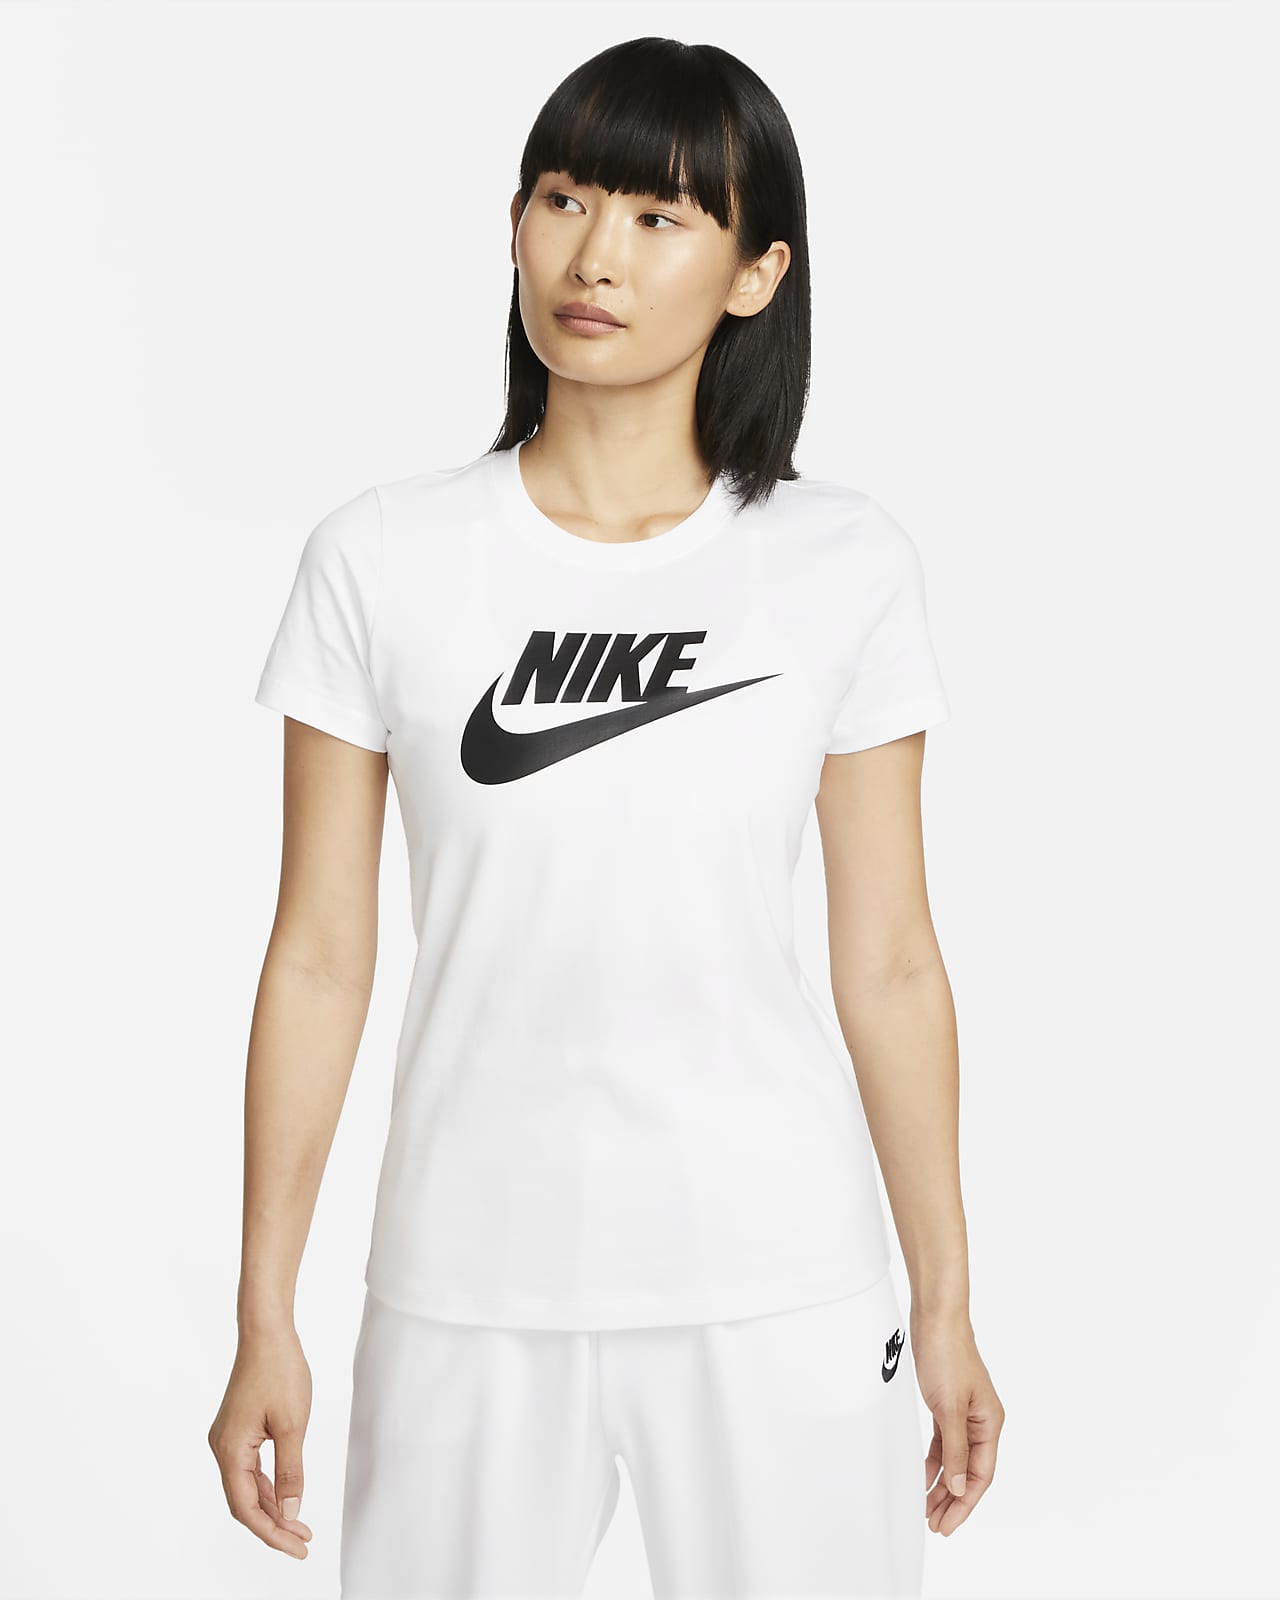 Nike Swoosh T-Shirt Women - White